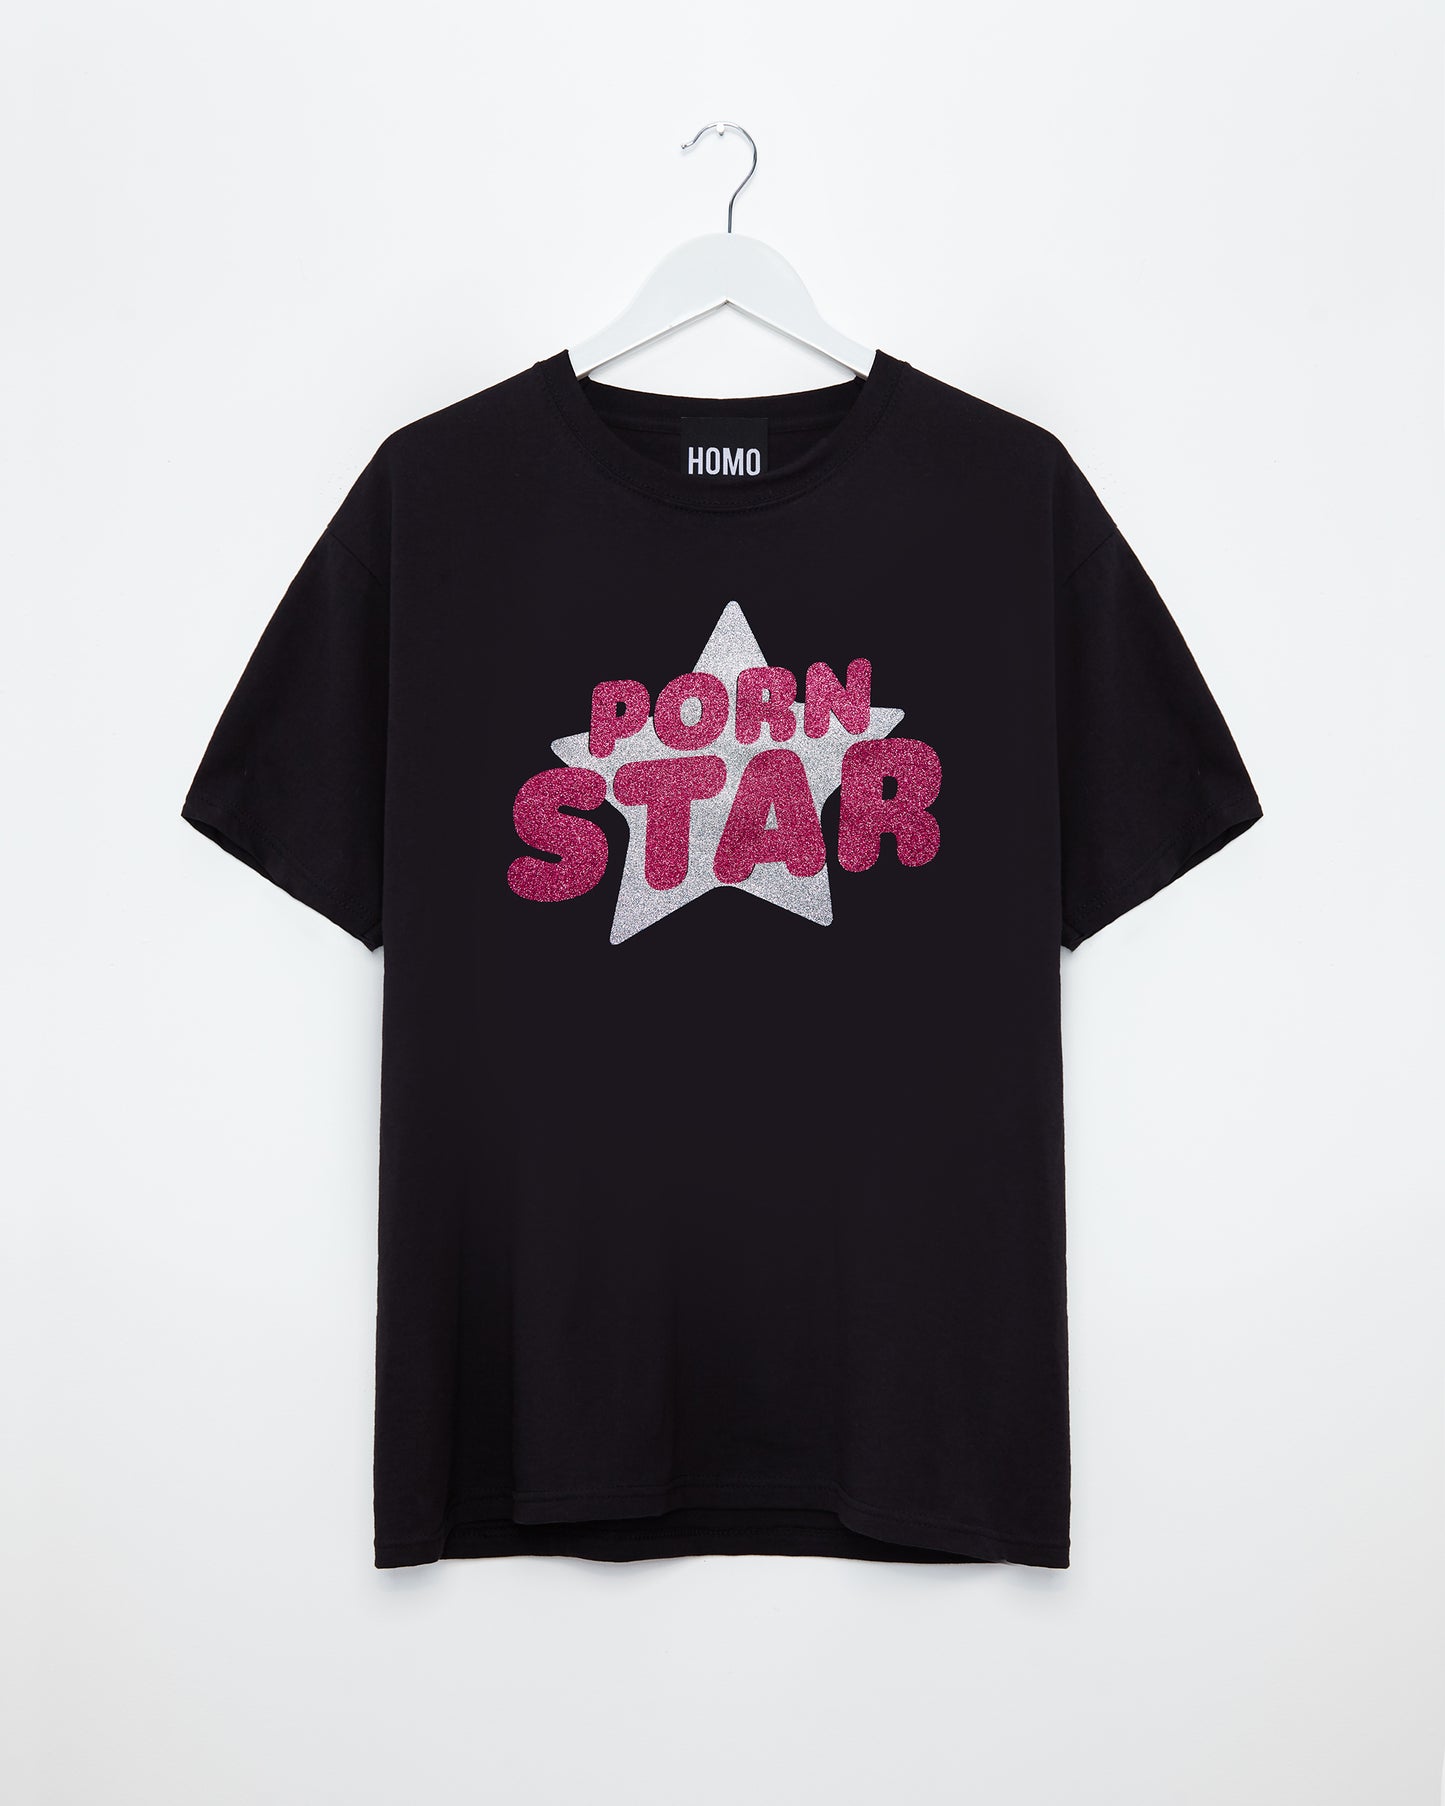 PORN STAR, Pink/silver glitter on black - tee